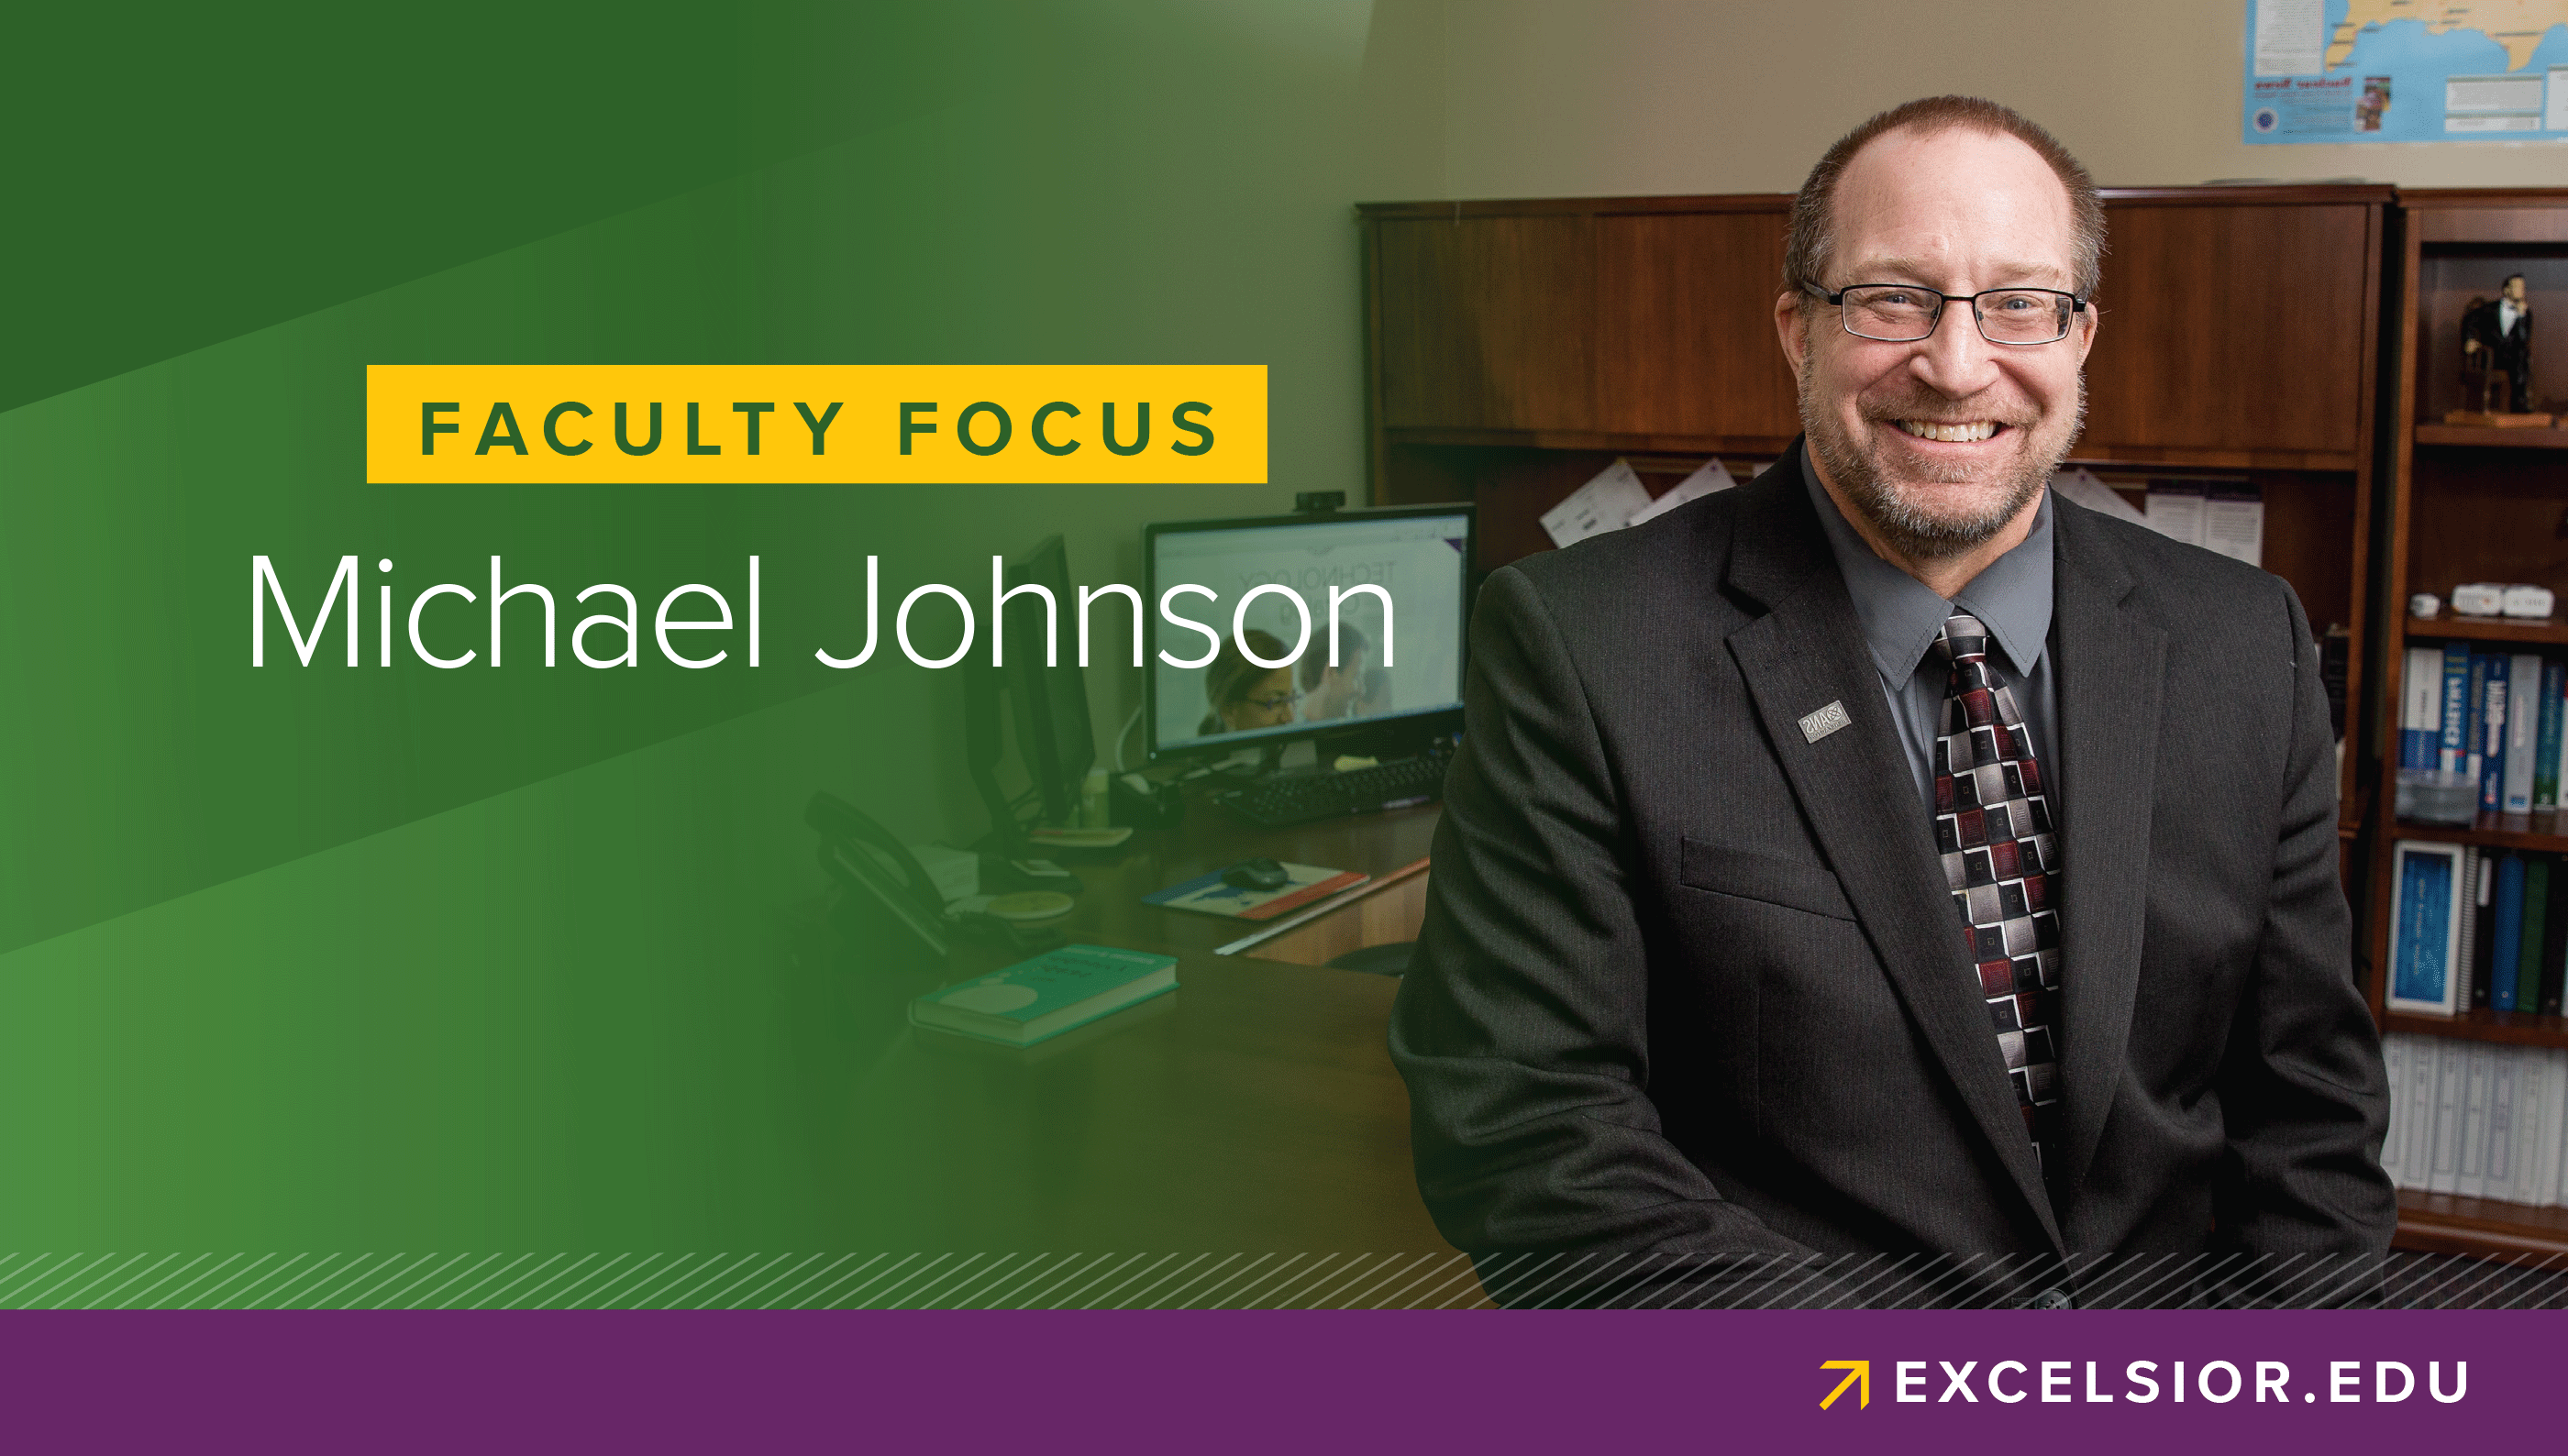 Faculty Focus: Michael Johnson on Leadership